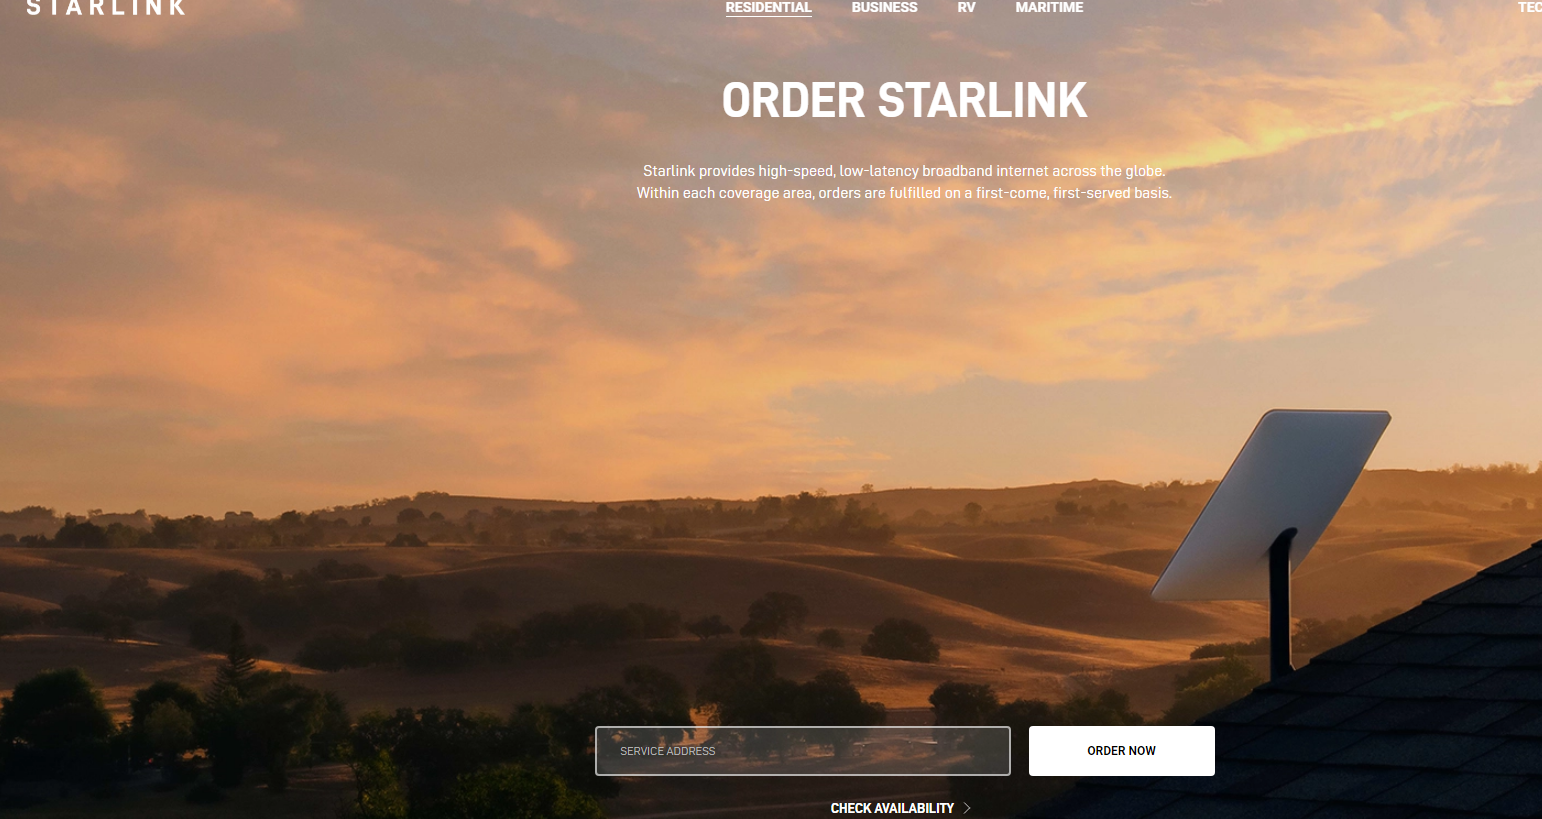 Starlink.com order page